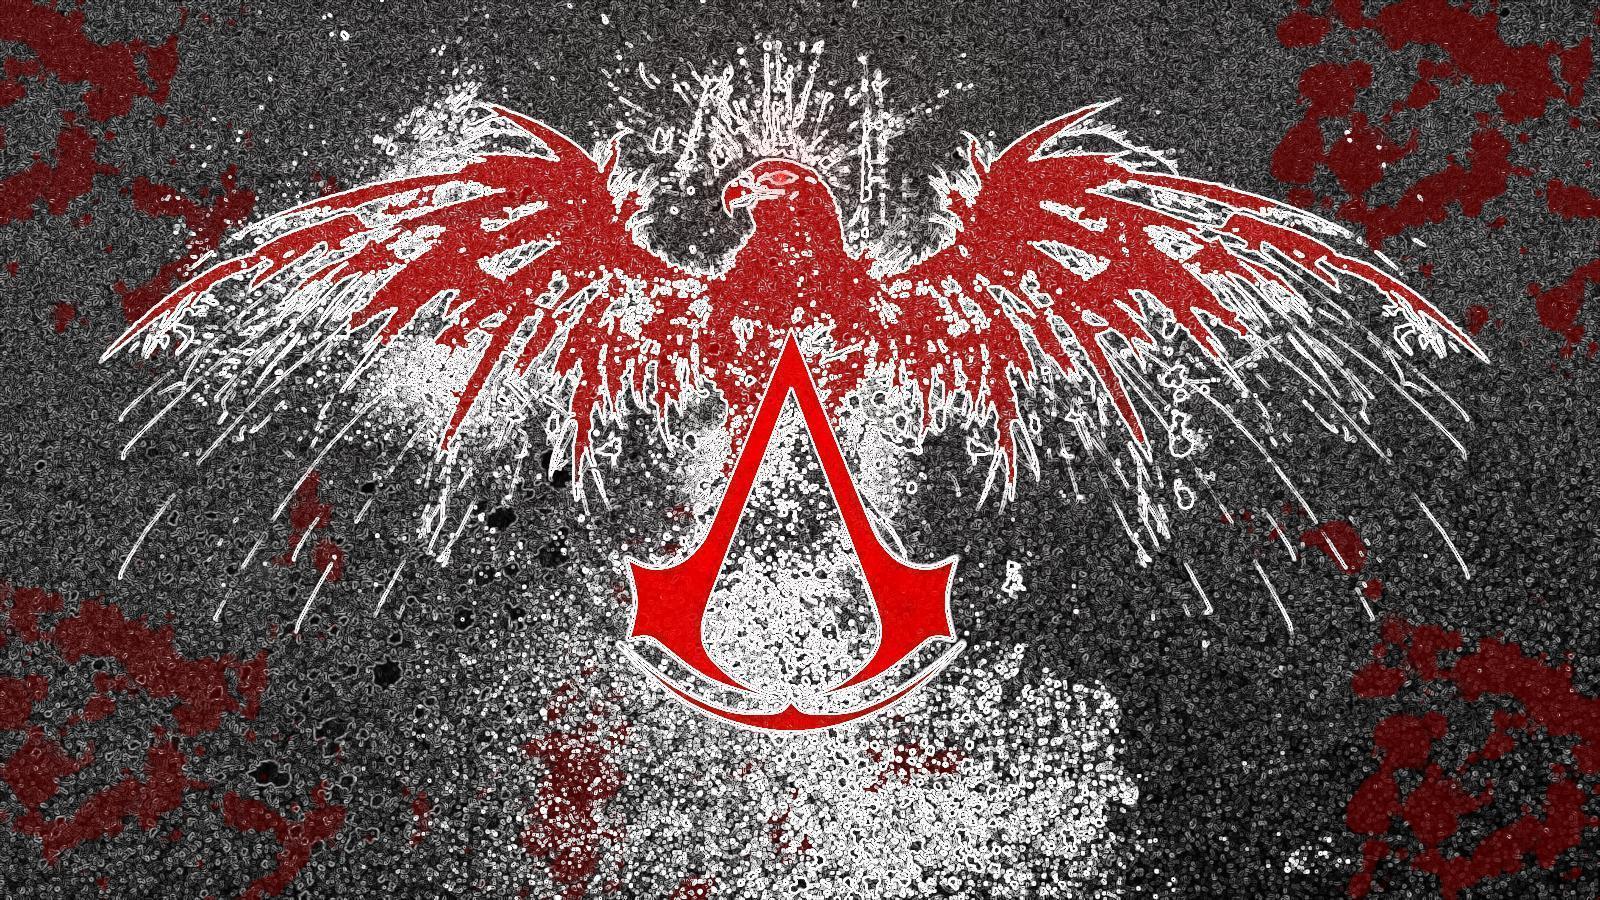 Assassin&;s Creed Eagle Background[GIMP FX]